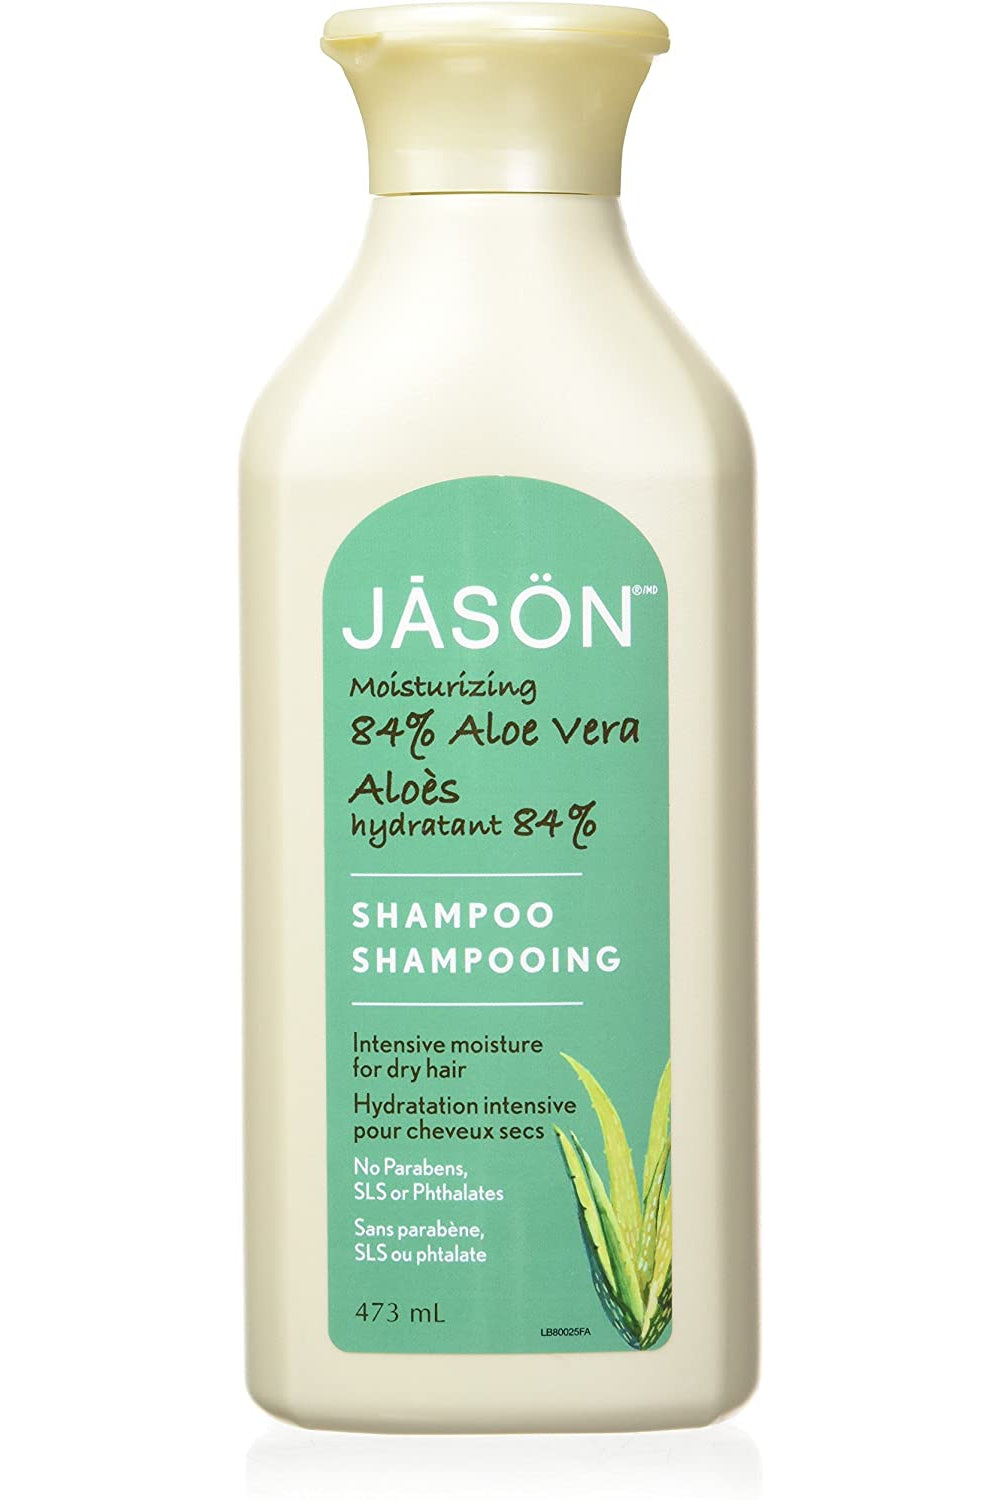 Jason Moisturizing Aloe Vera 84% Shampoo 473ml